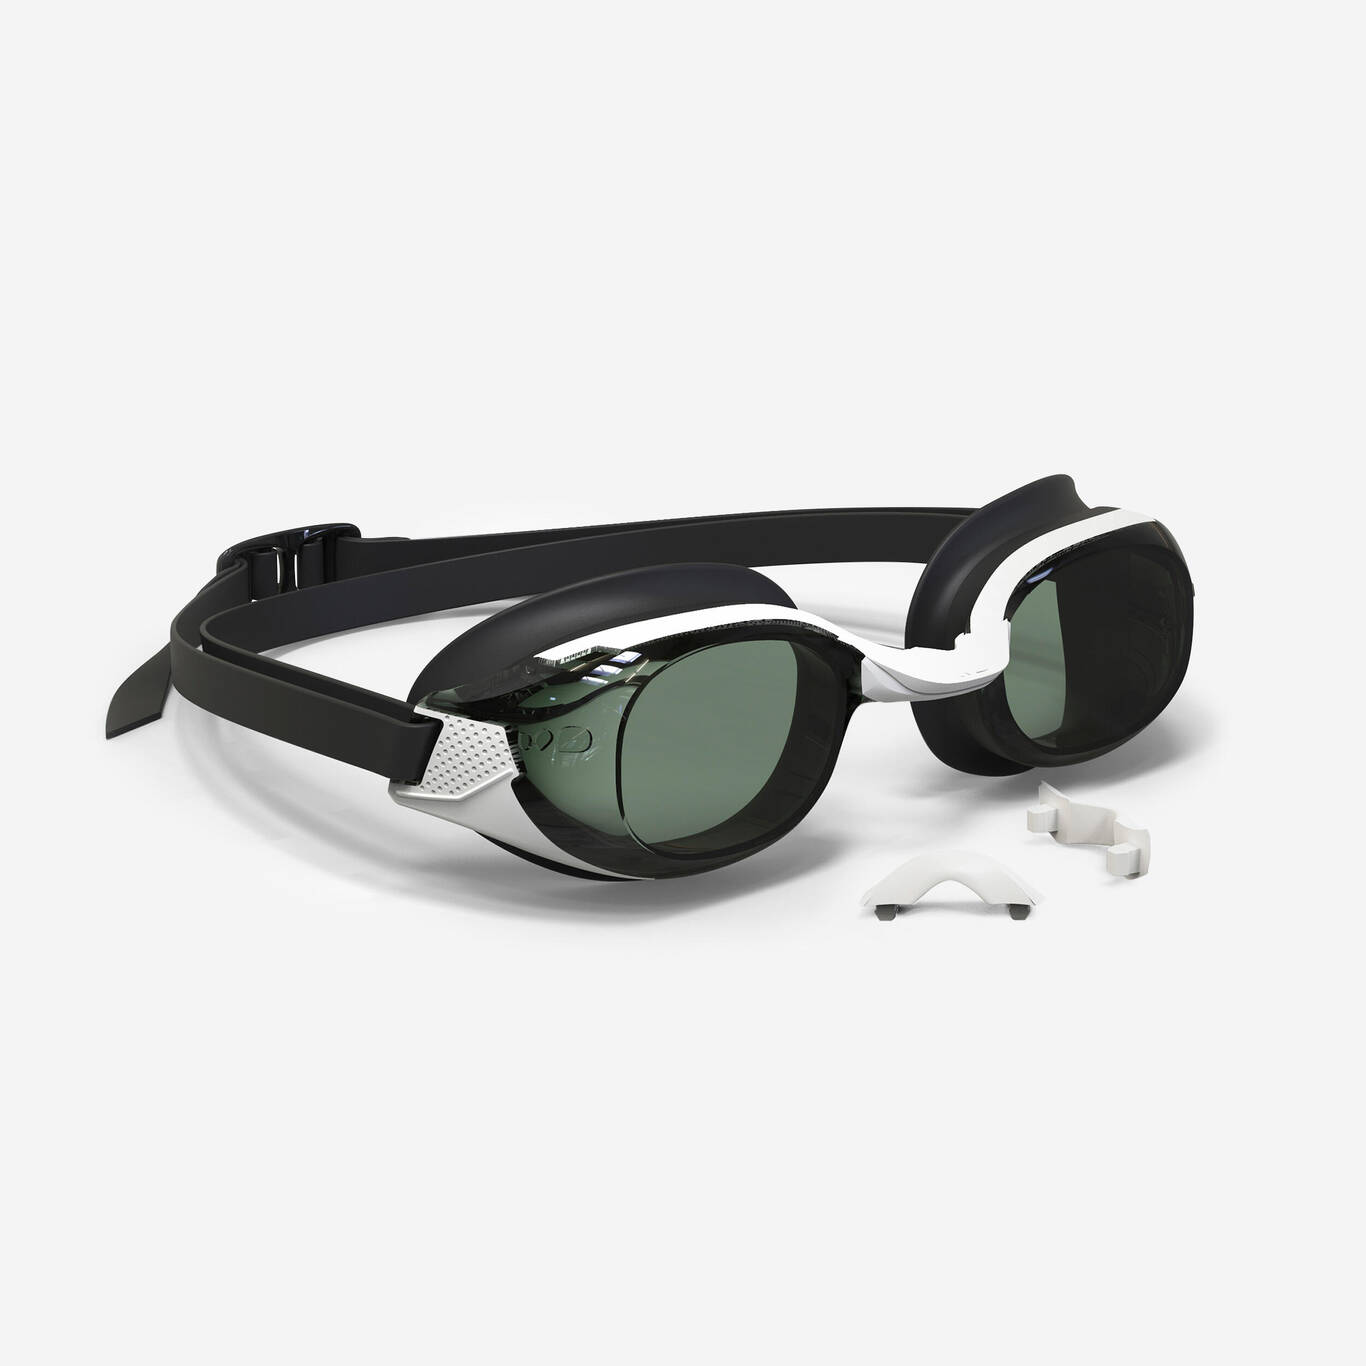 Kacamata Renang - Bfit - Lensa Smoke - hitam/putih